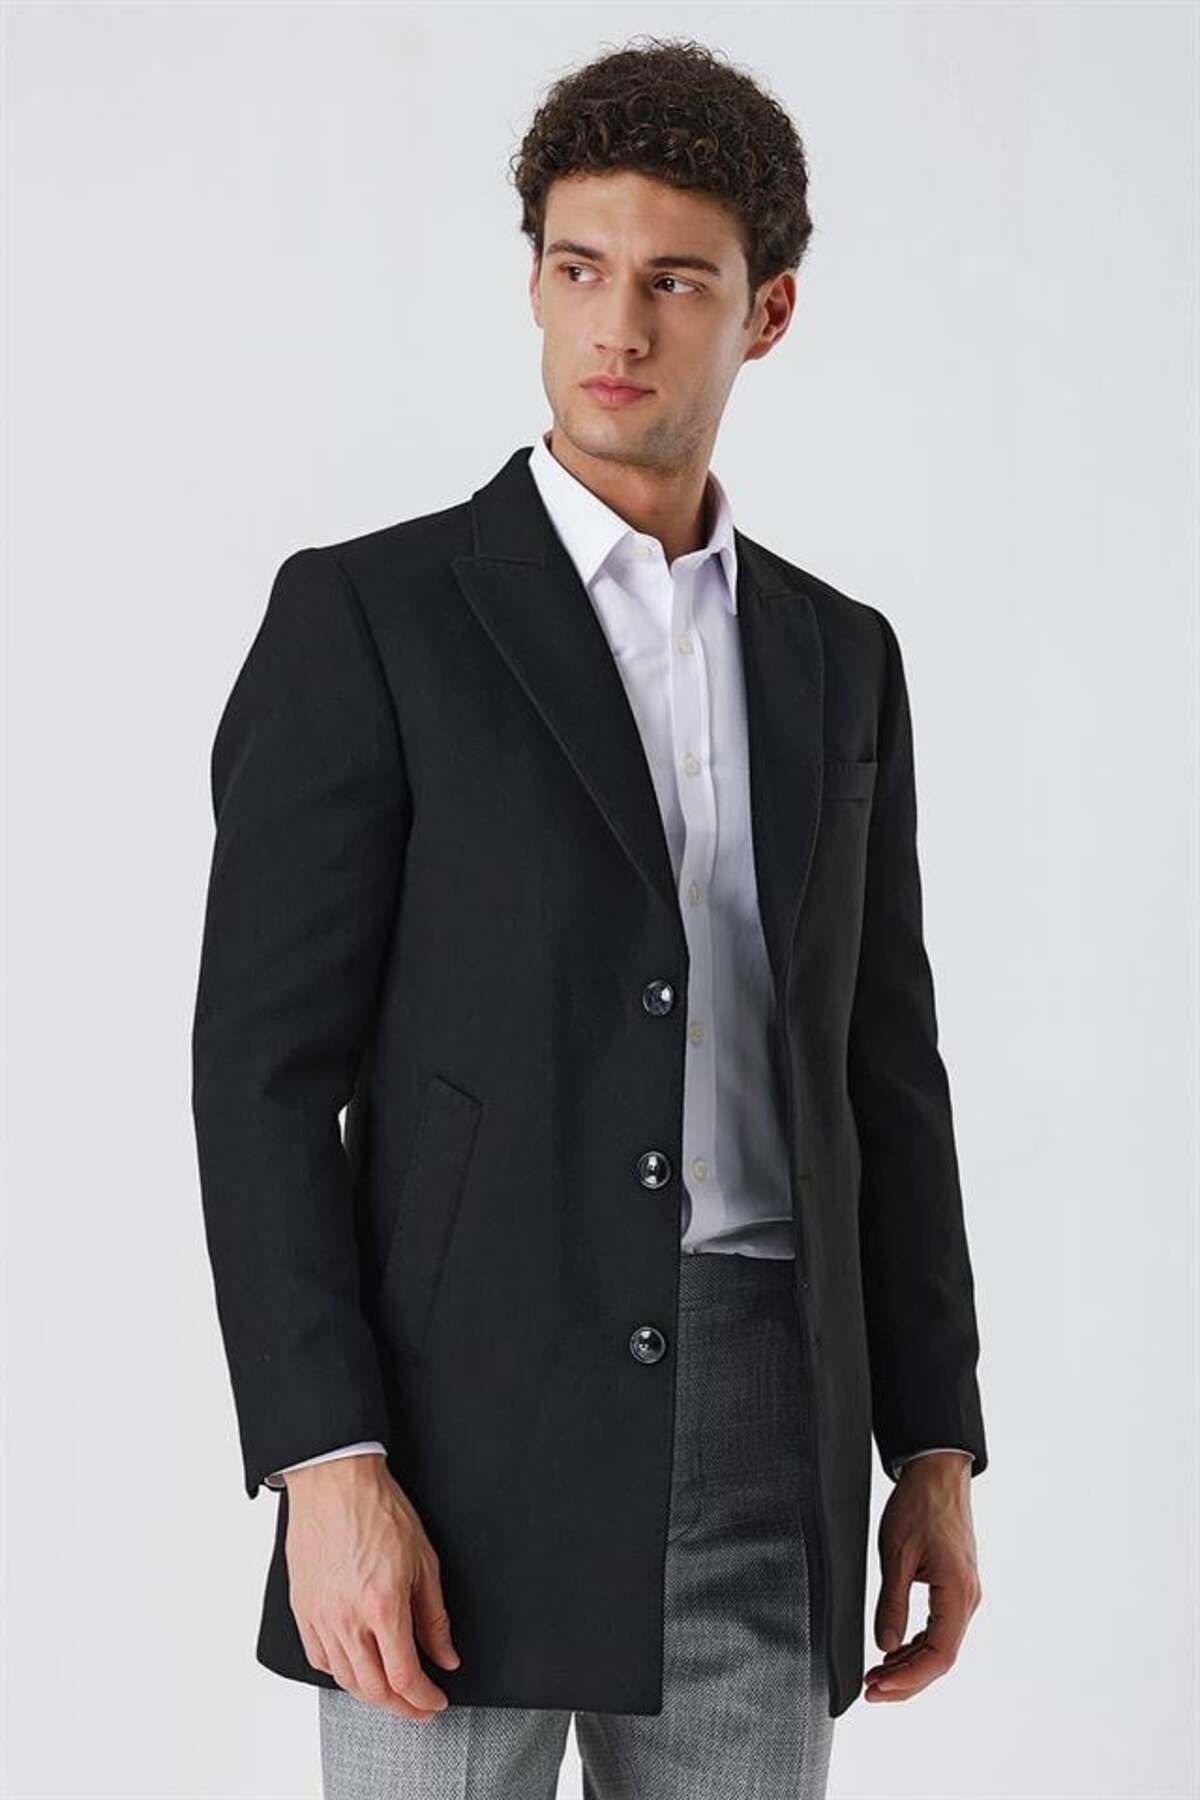 İmza Siyah Kaşe Kırlangıç Yaka Yırtmaçlı Astarlı Slim Fit Dar Kesim Klasik Palto 1005225157